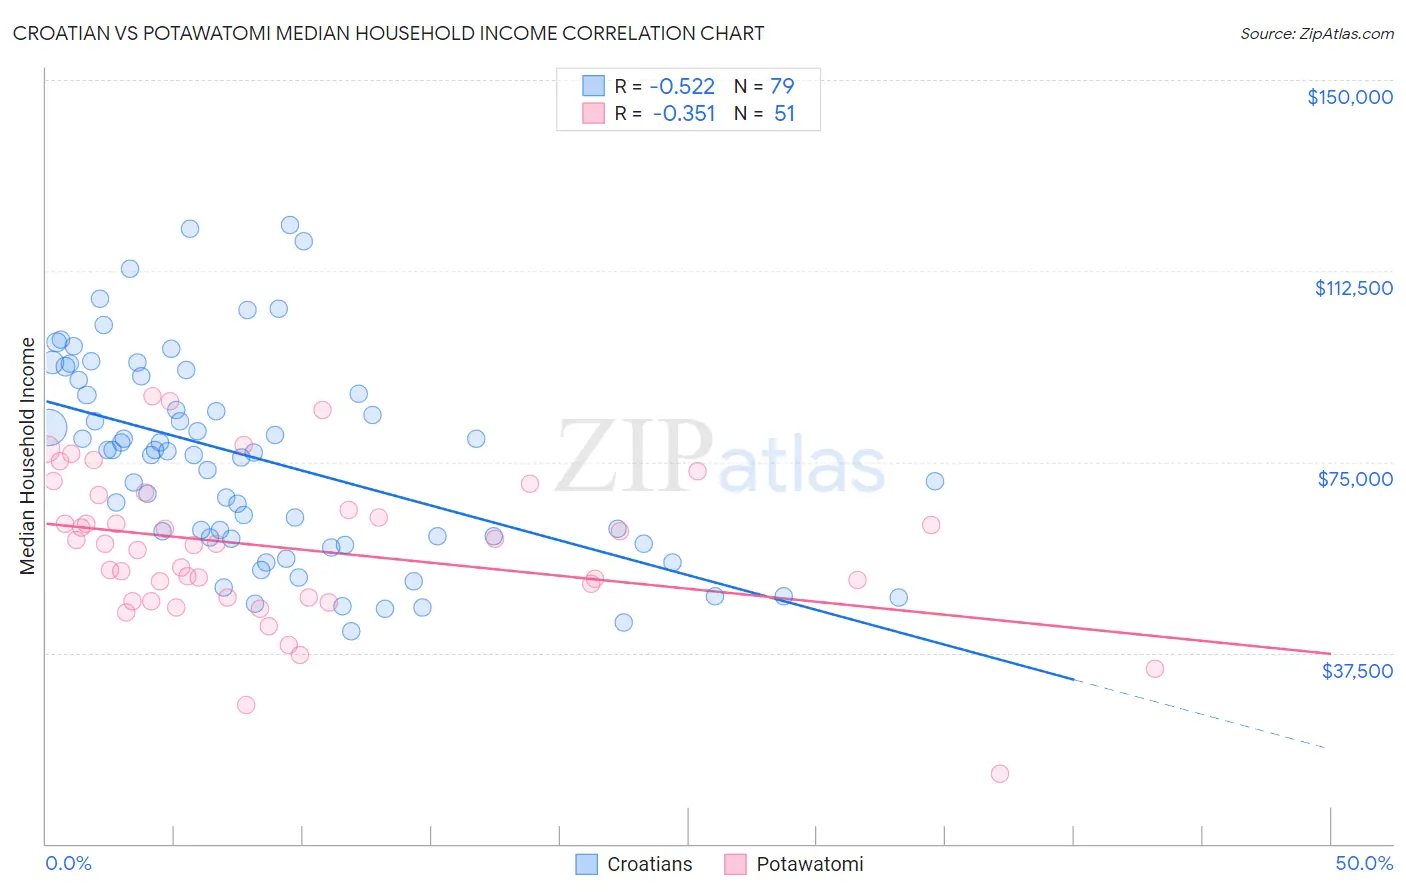 Croatian vs Potawatomi Median Household Income